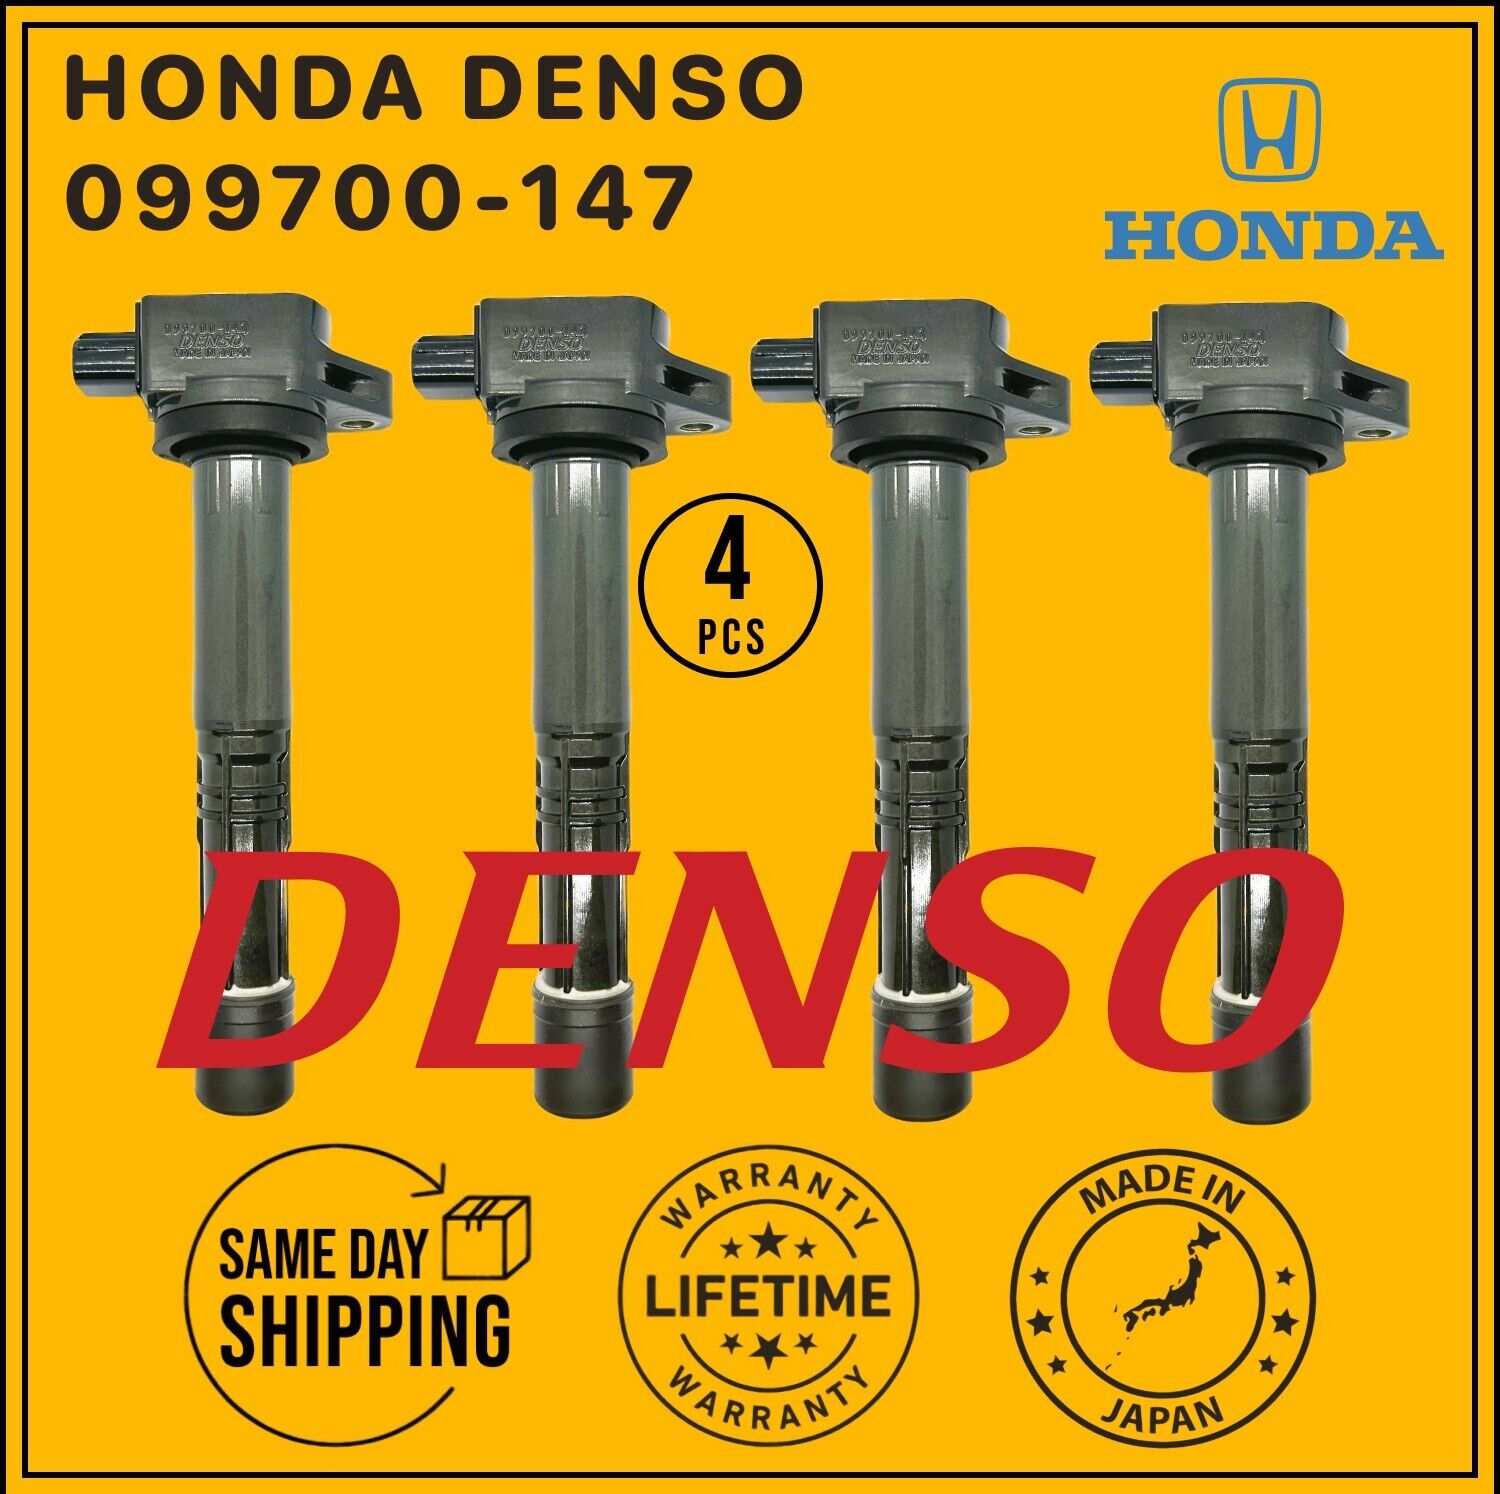 099700-147 Denso x4 Ignition Coils for 2008-2012 Honda CR-V Accord Civic 2.4L L4